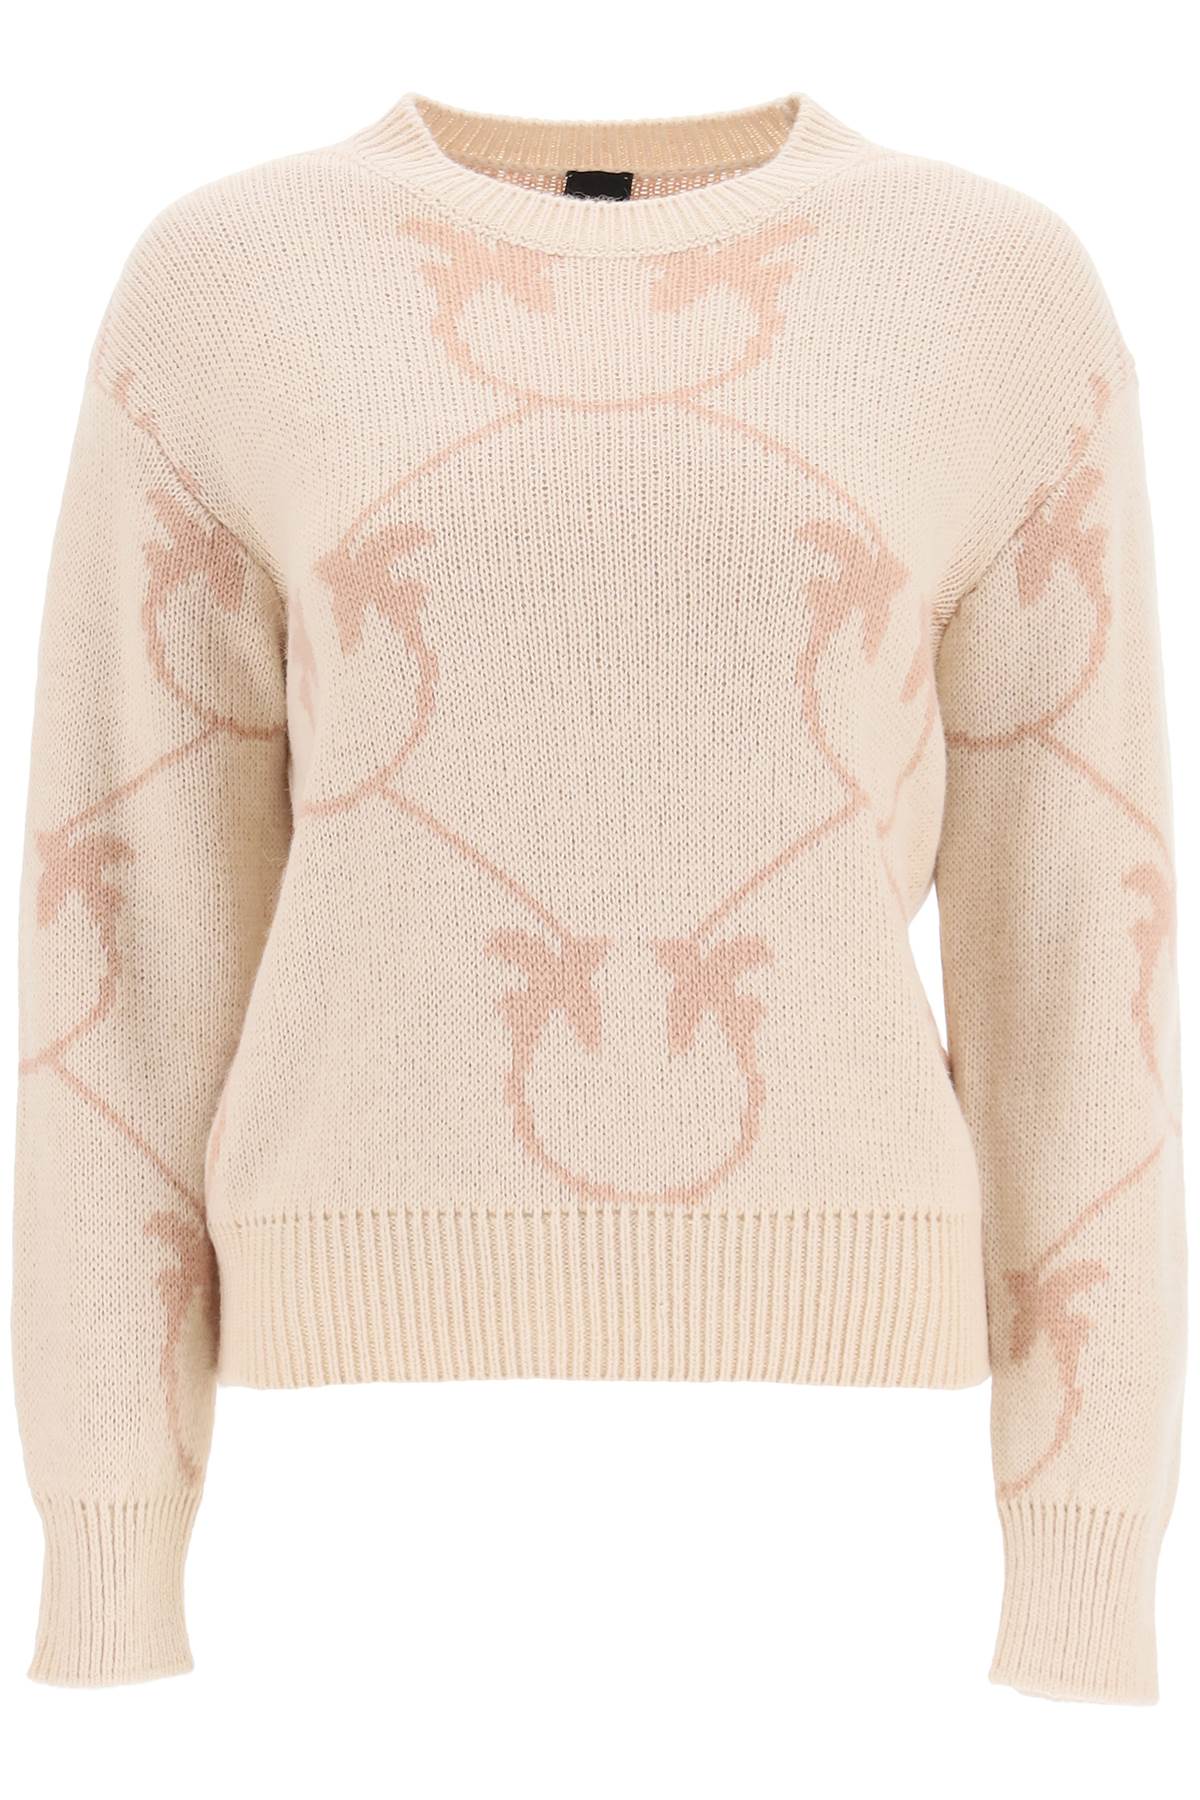 Pinko Love Birds Alpaca And Wool Blend Sweater